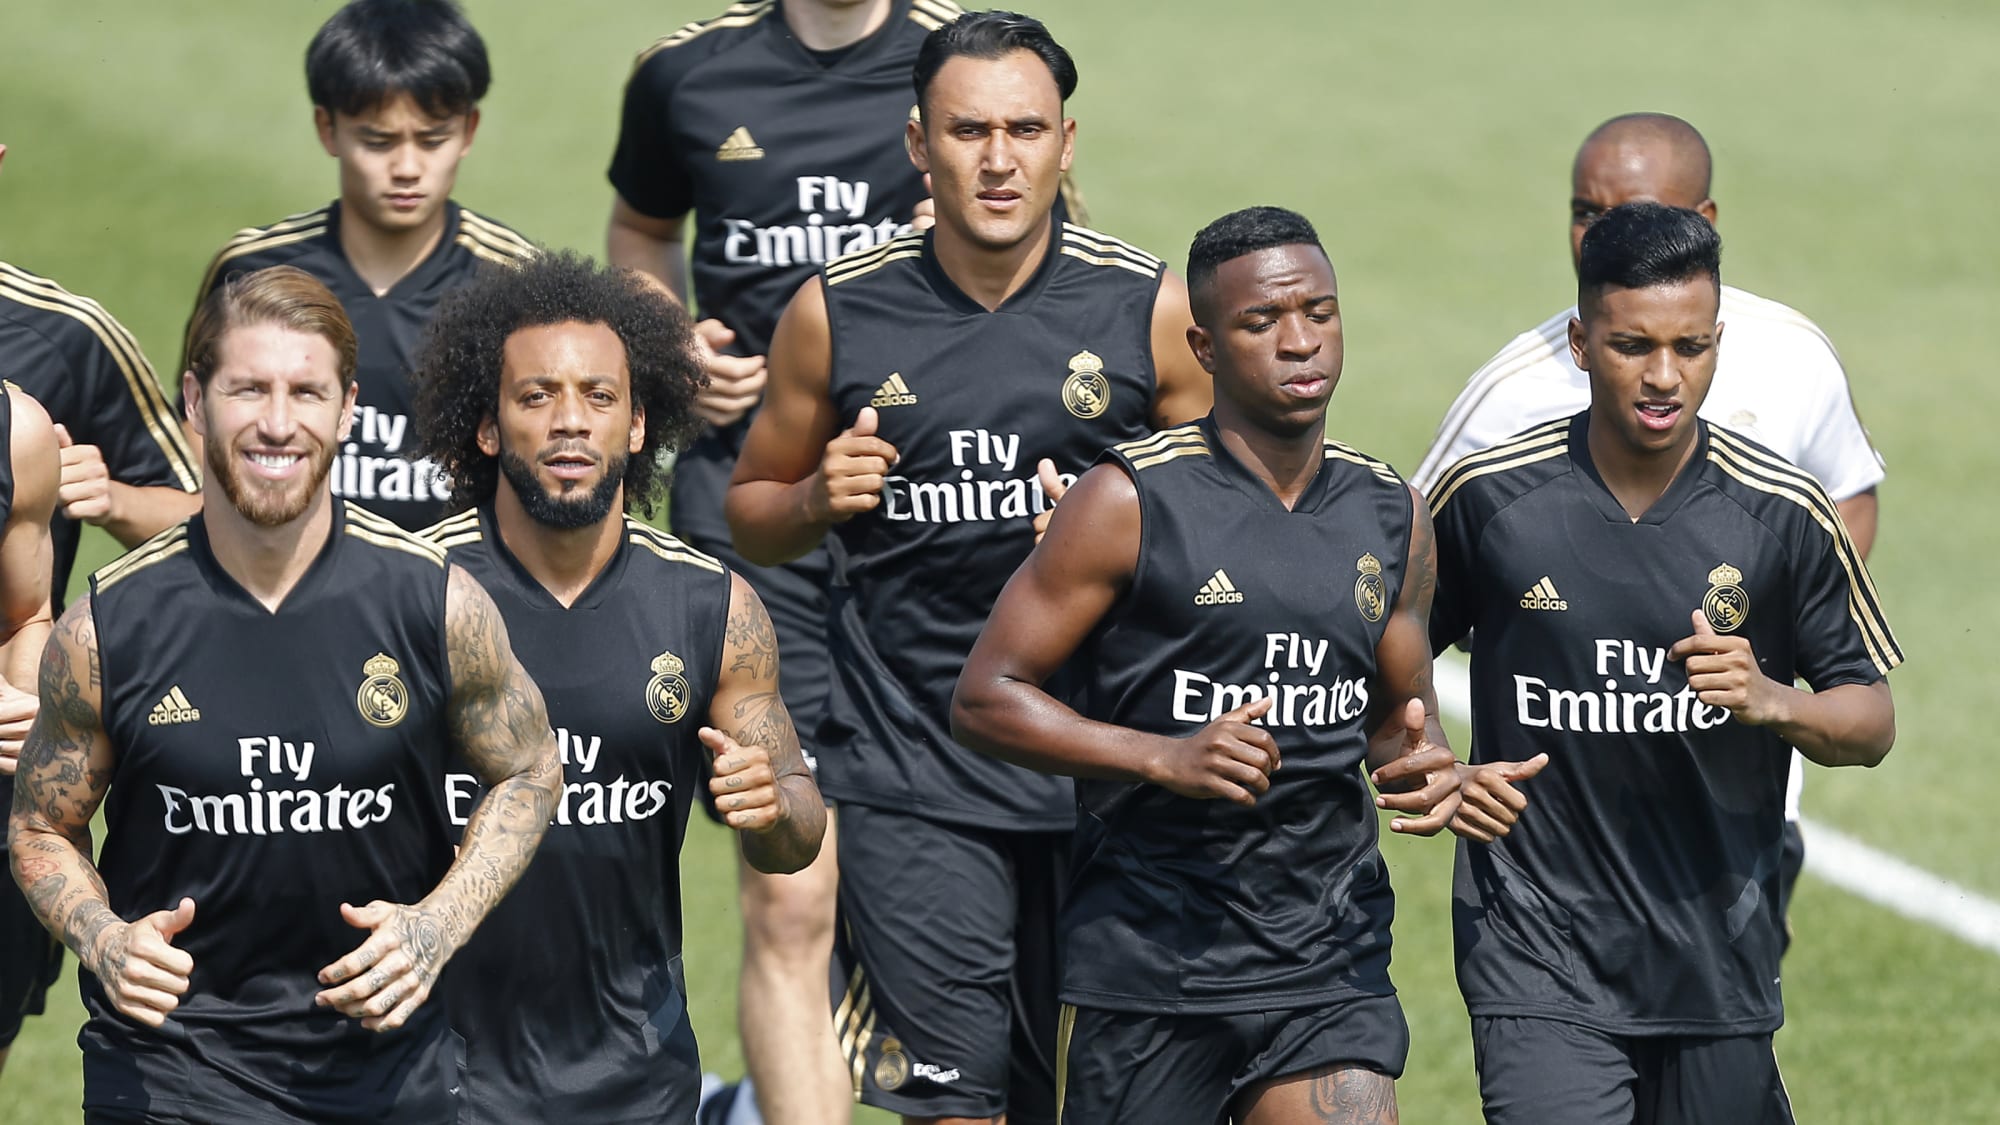 Analysing Real Madrid's Brazilian future potential superstars